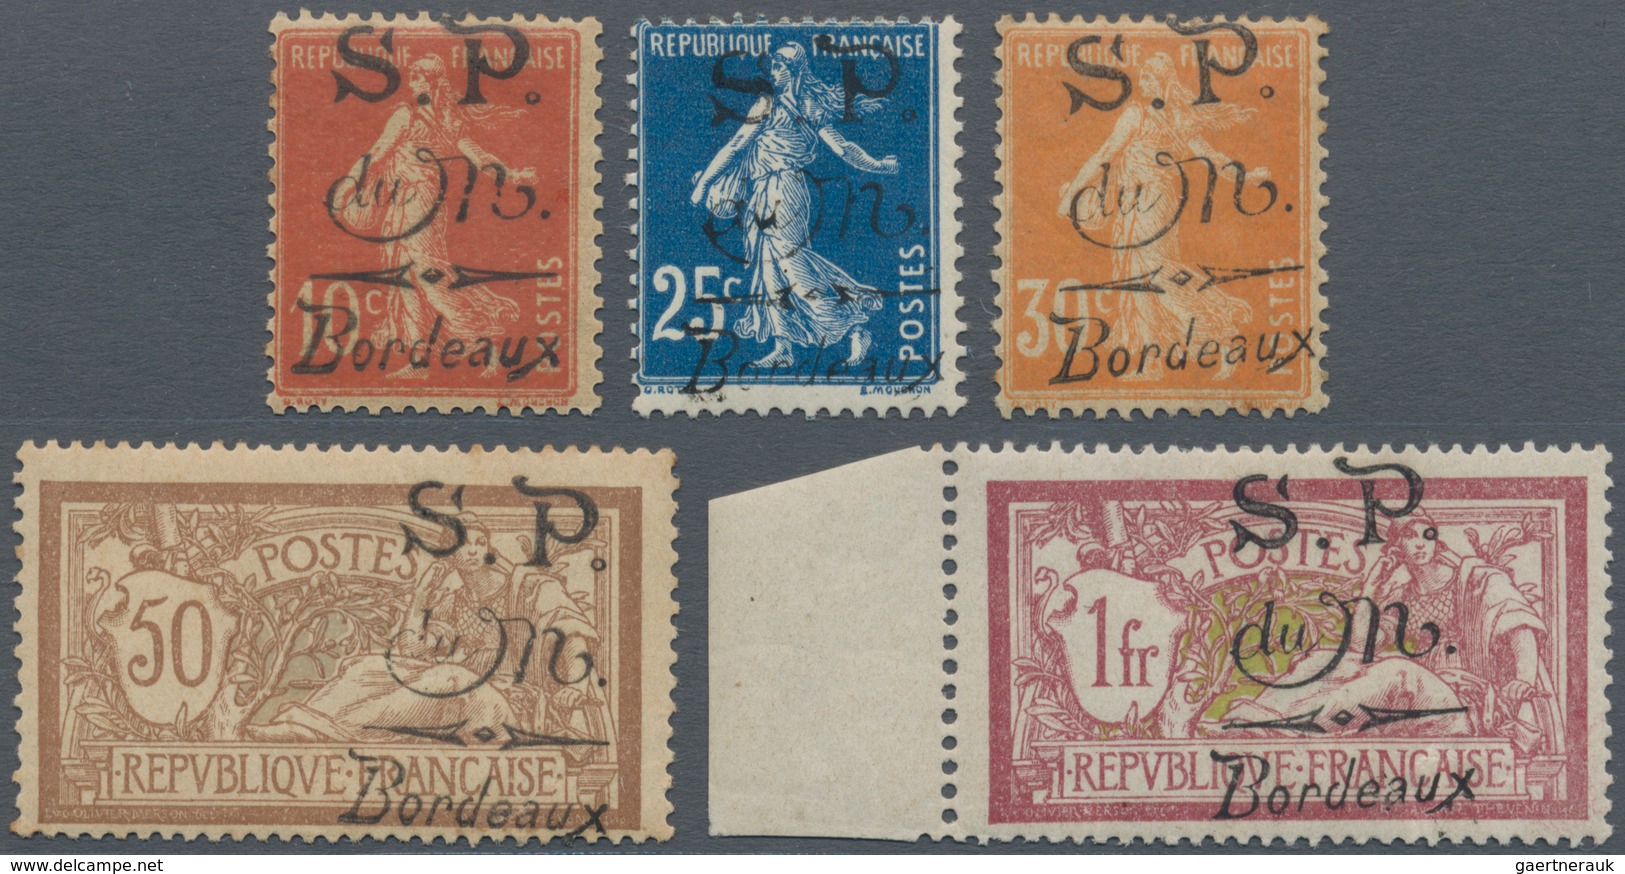 Montenegro: 1916, "S.P. Du M. Bordeaux" Overprints, Overprints On France Used As Officials For Gover - Montenegro